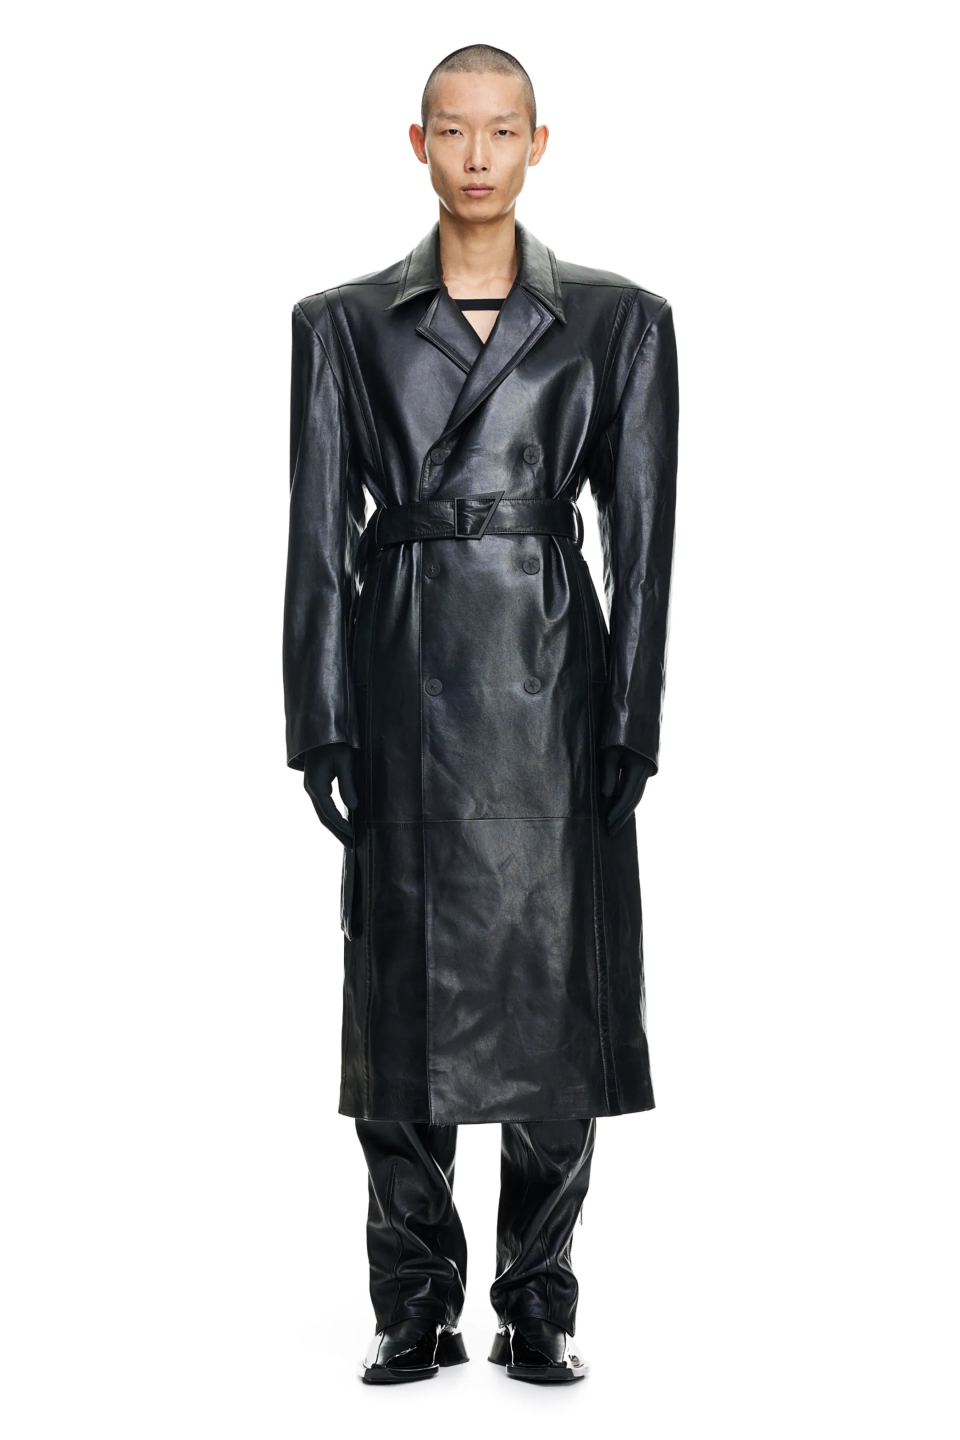 Mugler x H&M Leather Trench Coat